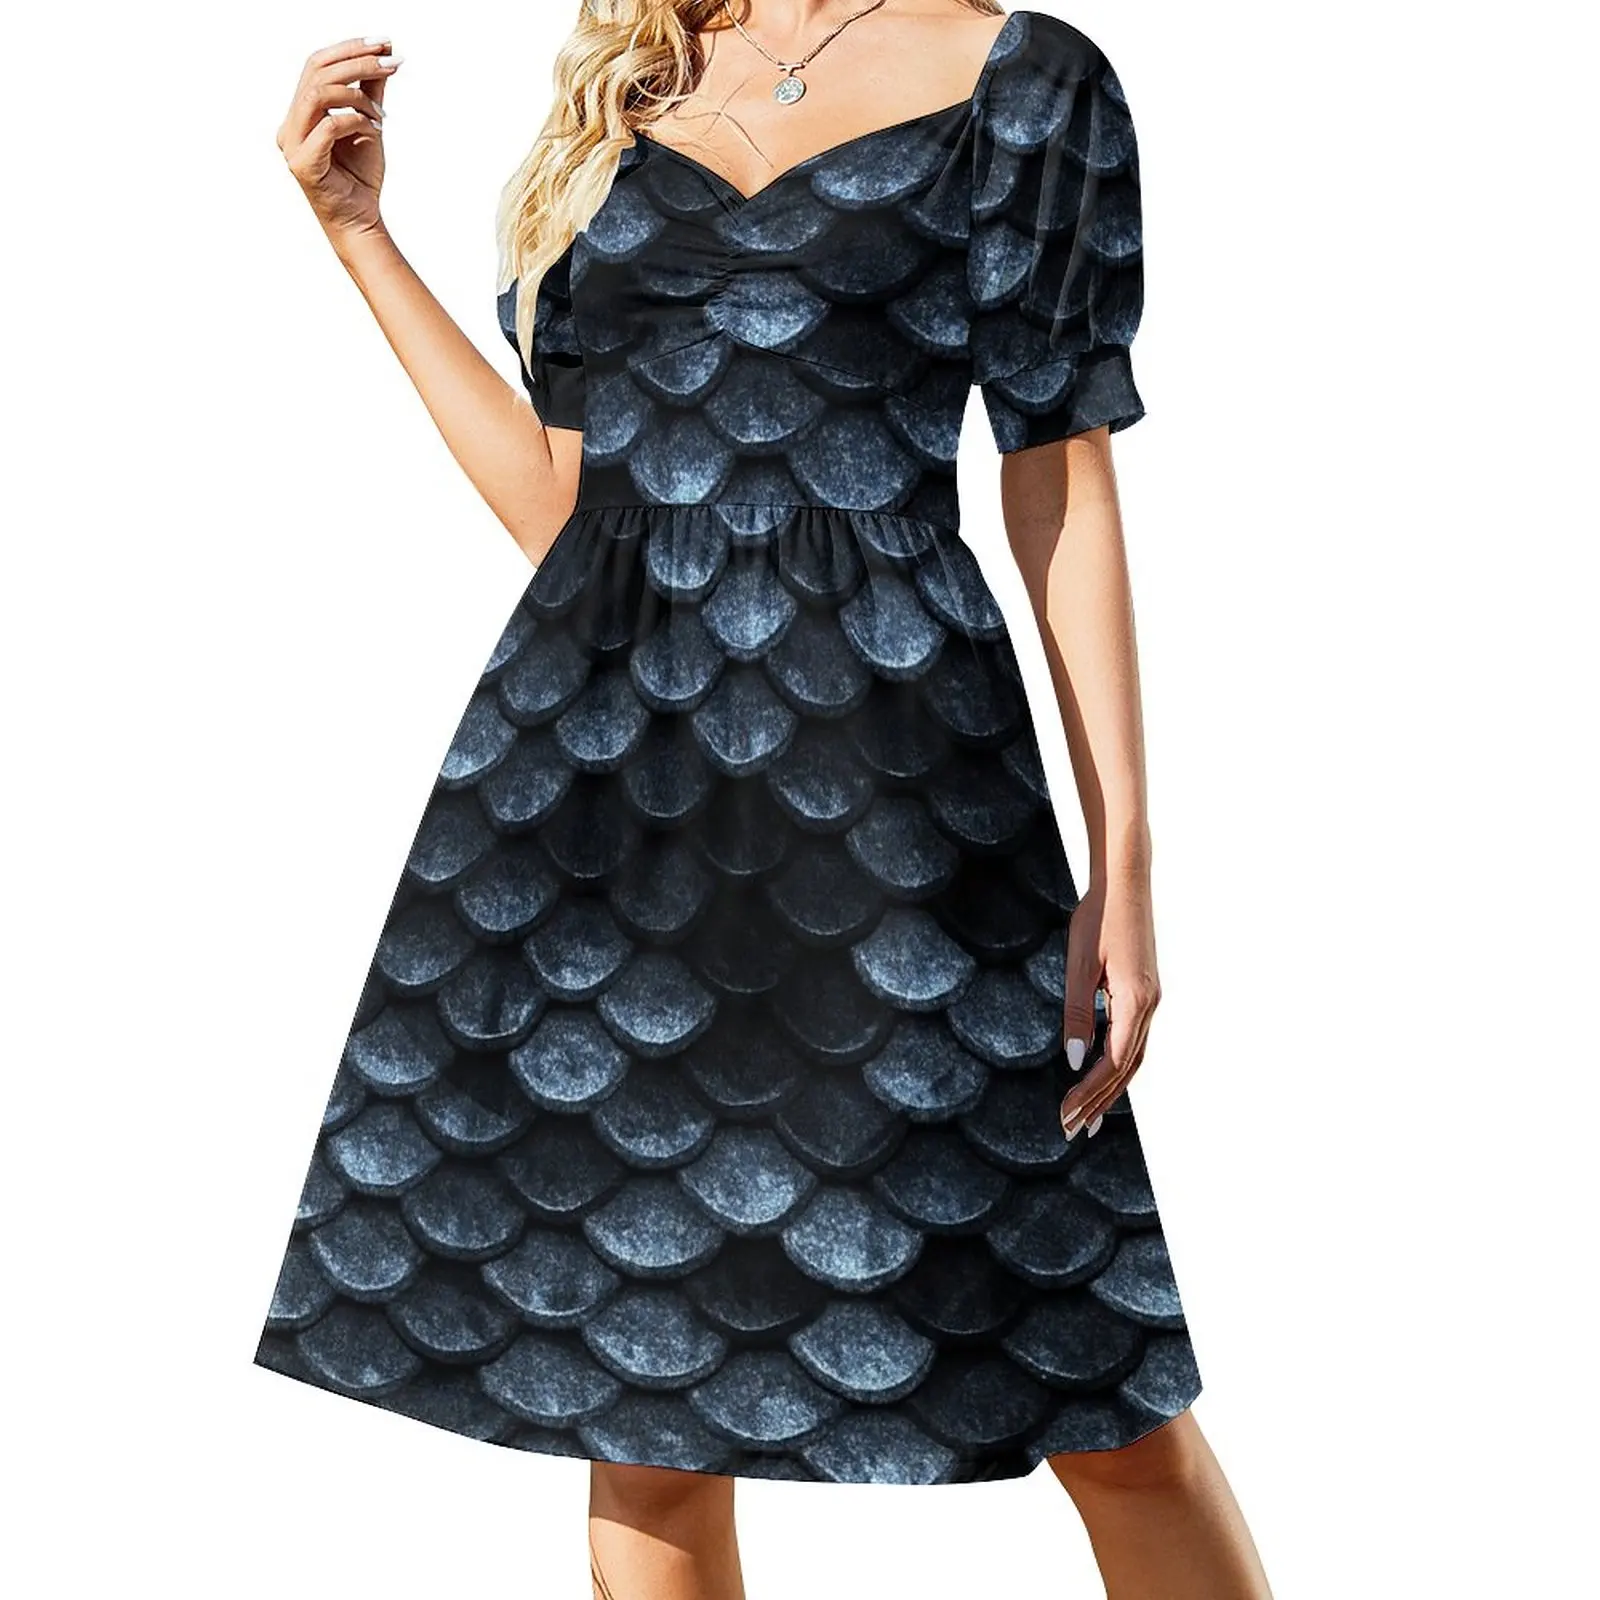 

Mermaid Fish Scales Deep Shade of Blues Dress Woman dresses dress women elegant luxury Women's summer skirt